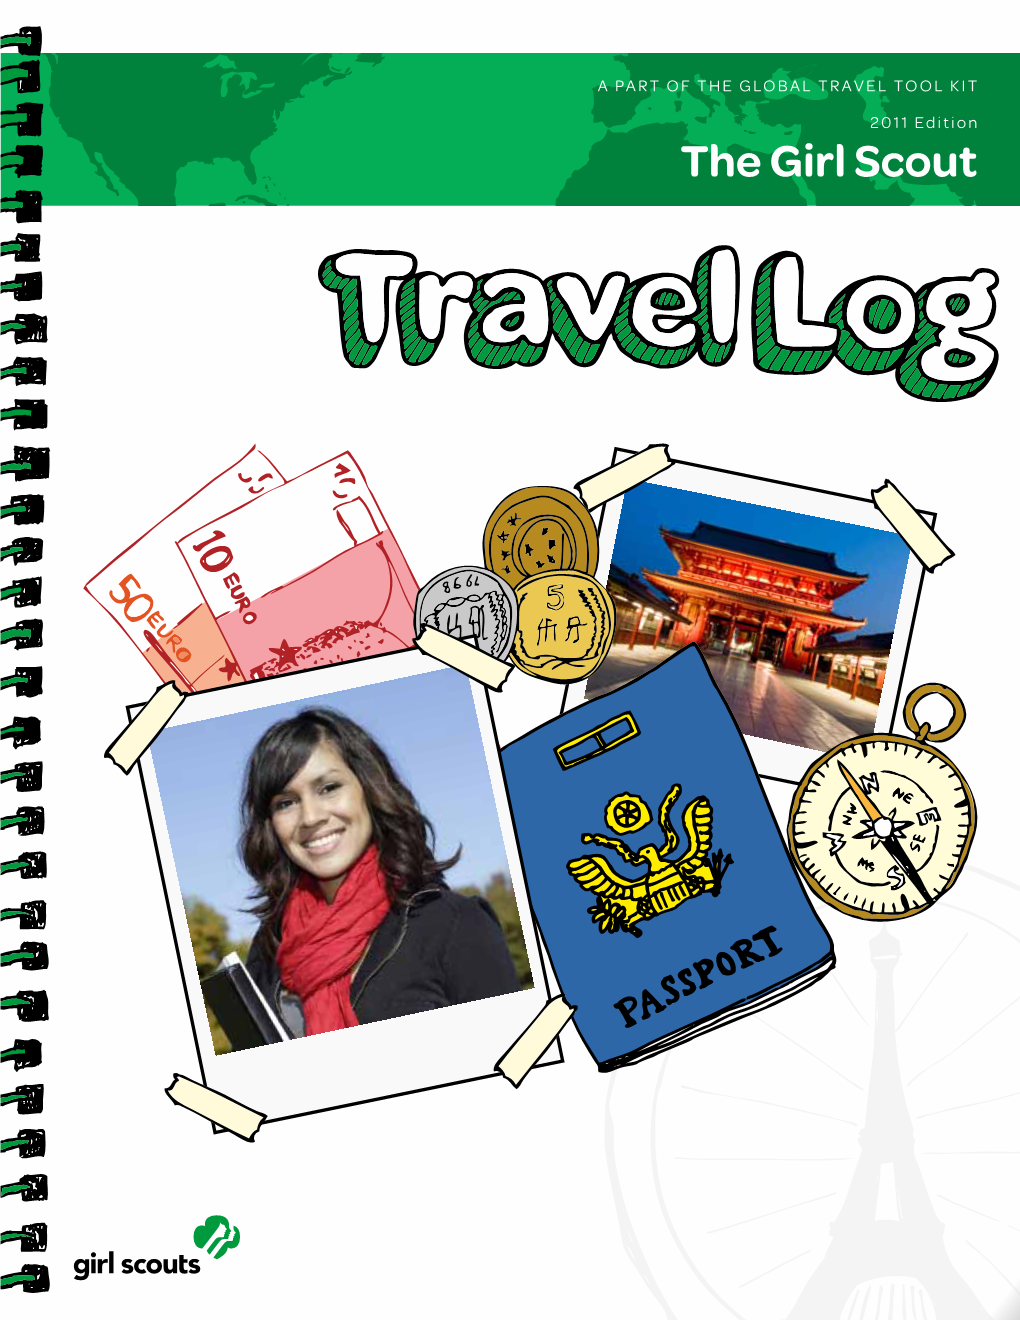 Global Travel Tool Kit